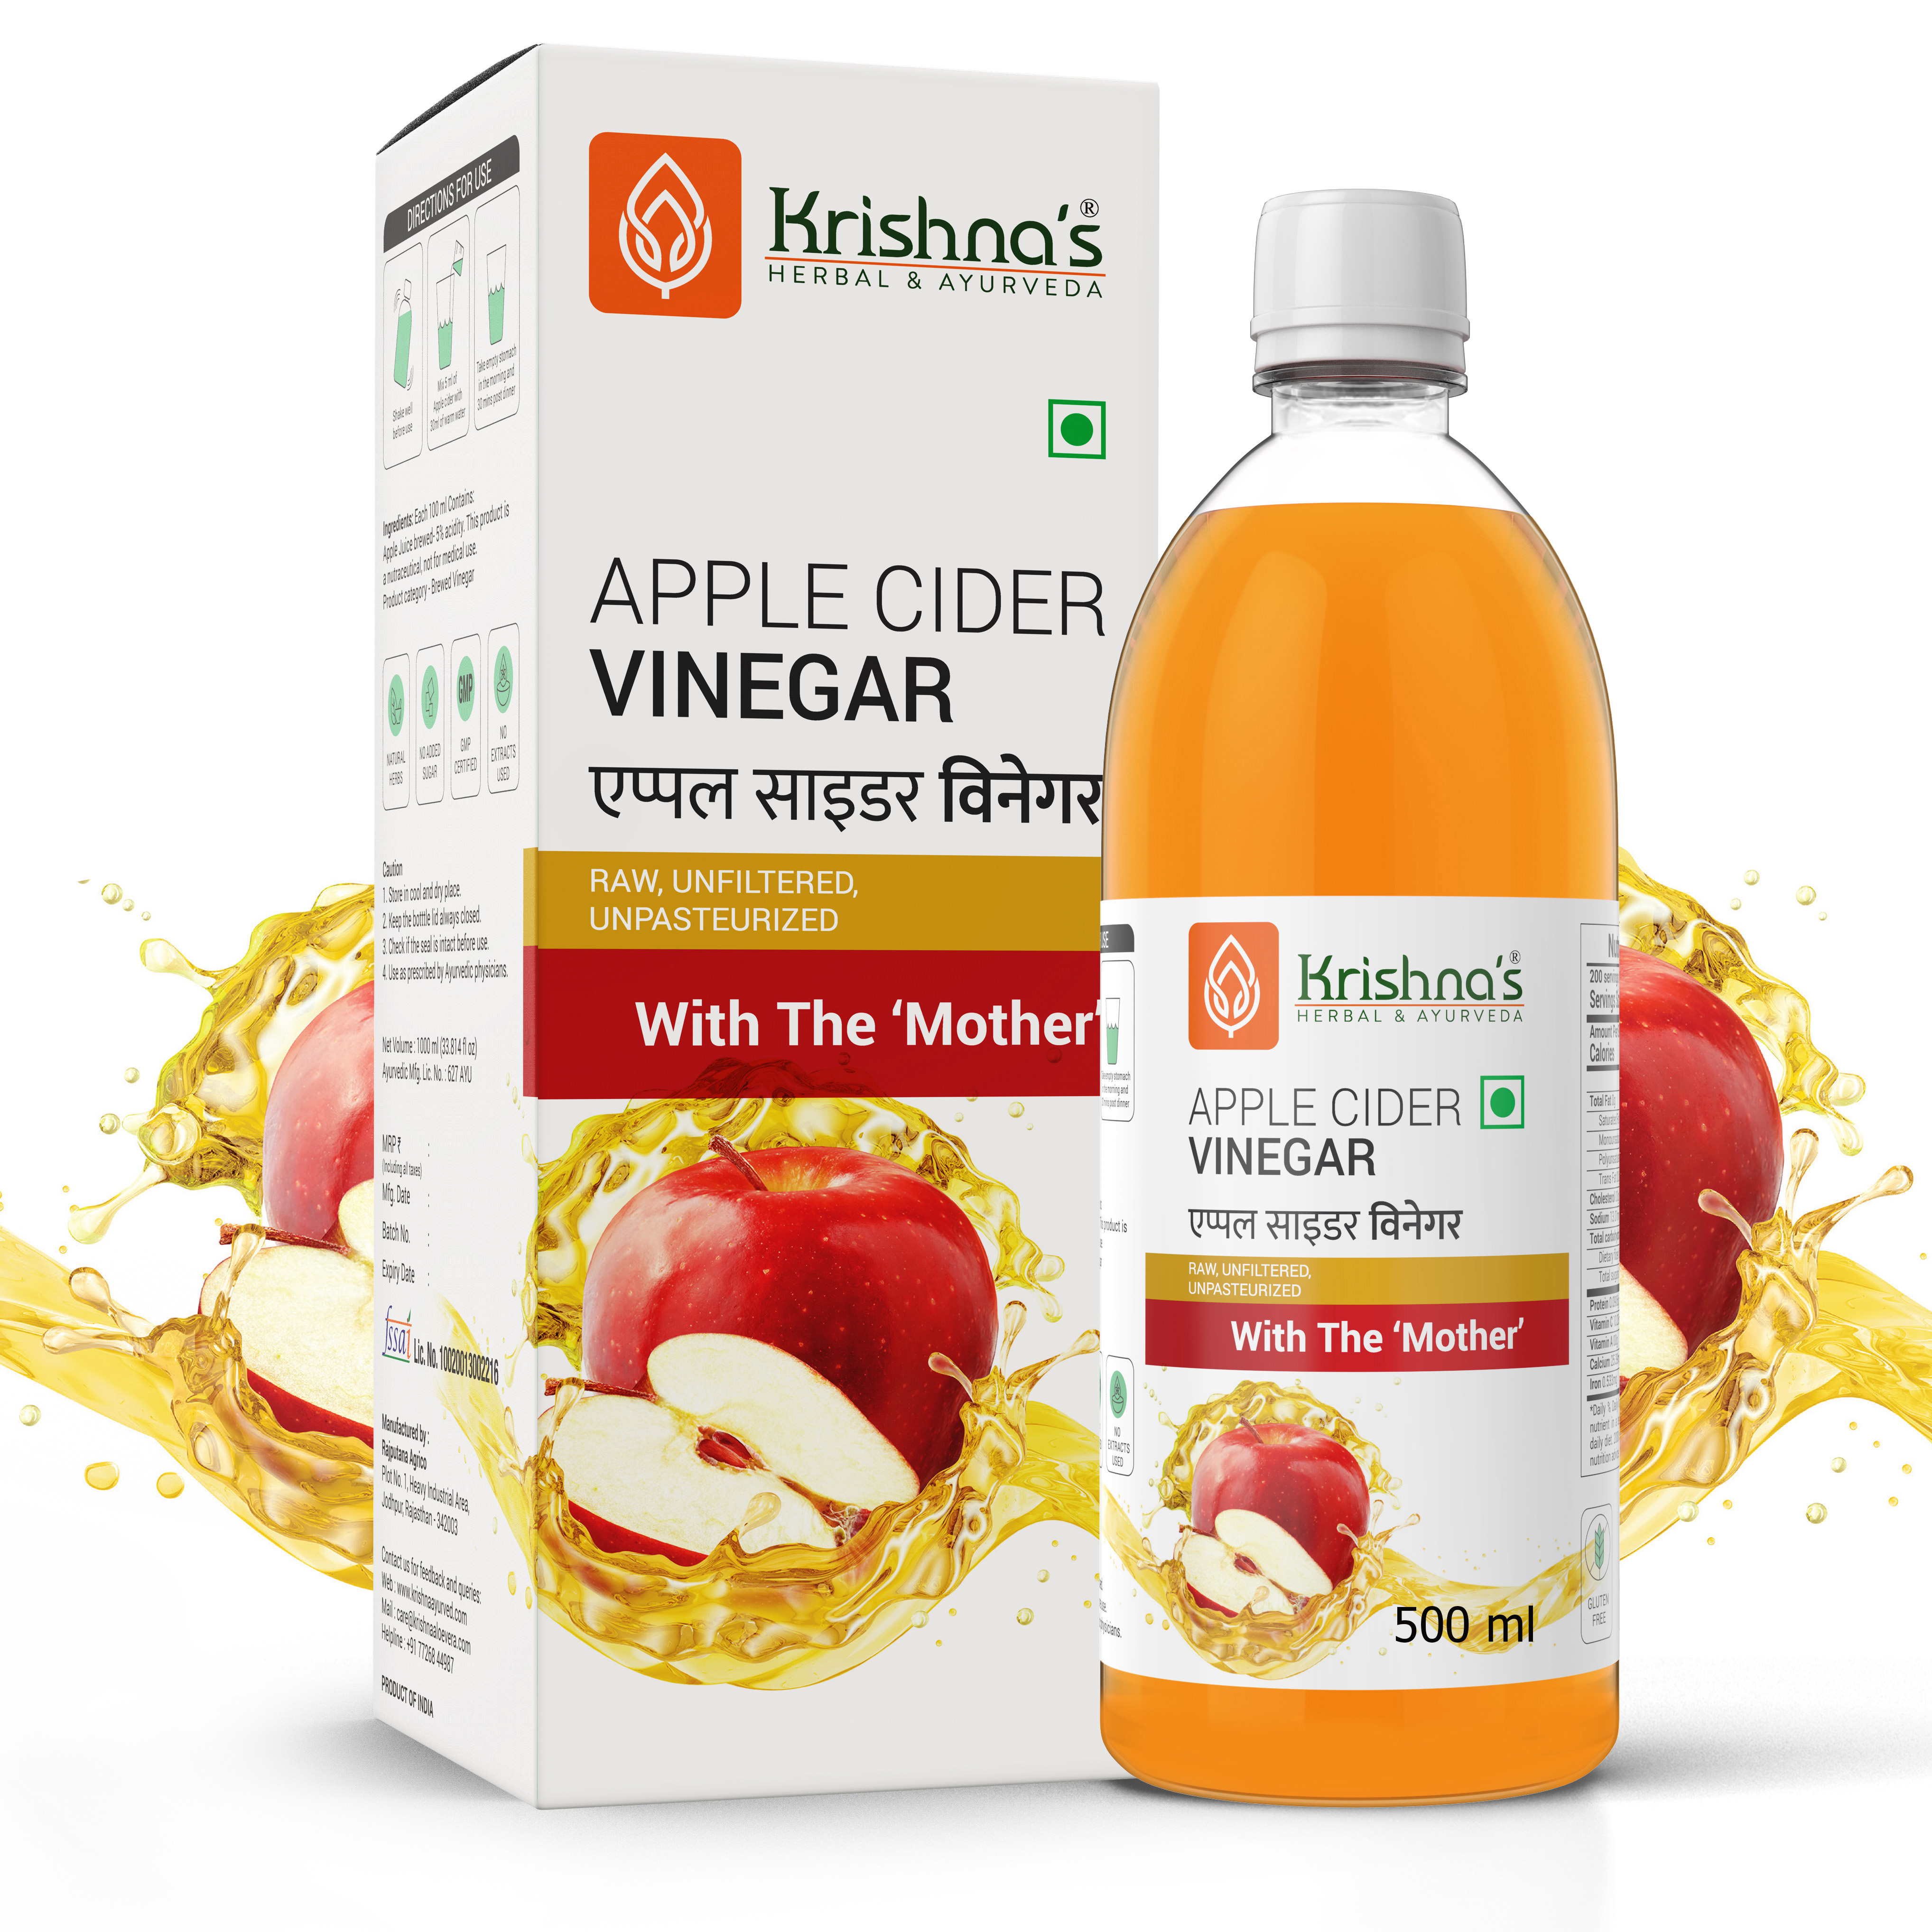 Buy Krishna Herbal Apple Cider Vinegar at Best Price Online